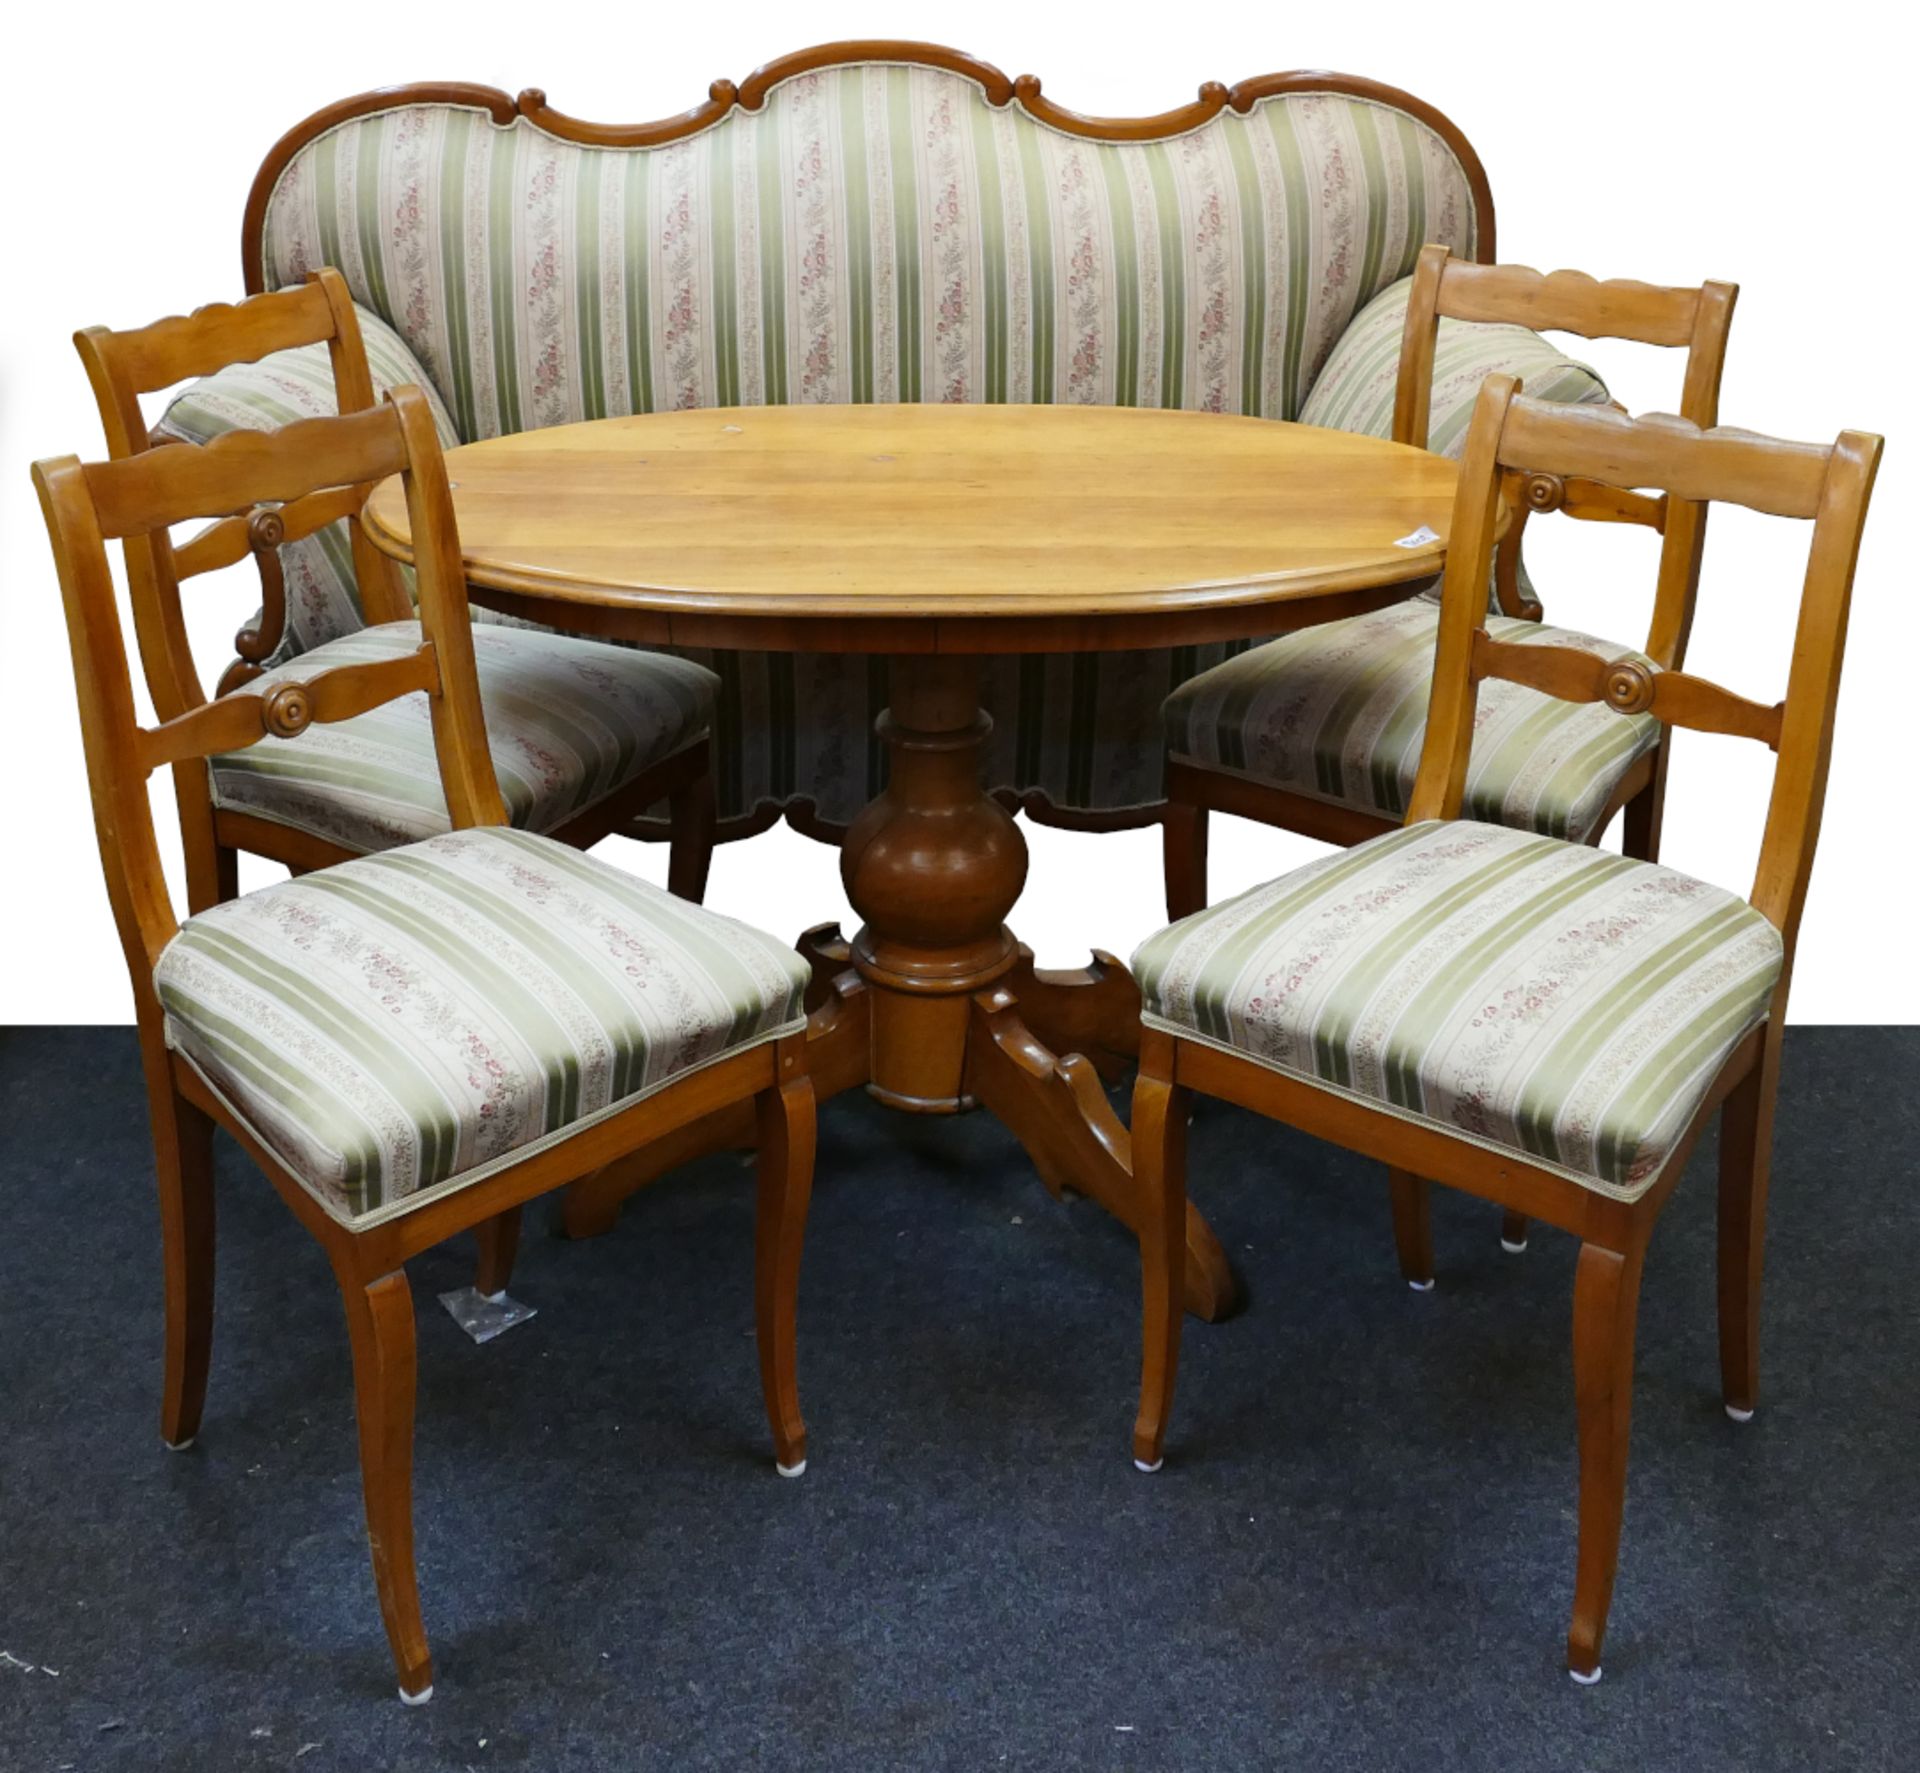 1 Biedermeier-Sitzgruppe wohl um 1840: 1 Zweisitzer ca. 103x172x71cm, 4 Stühle je H ca. 91cm, je mit